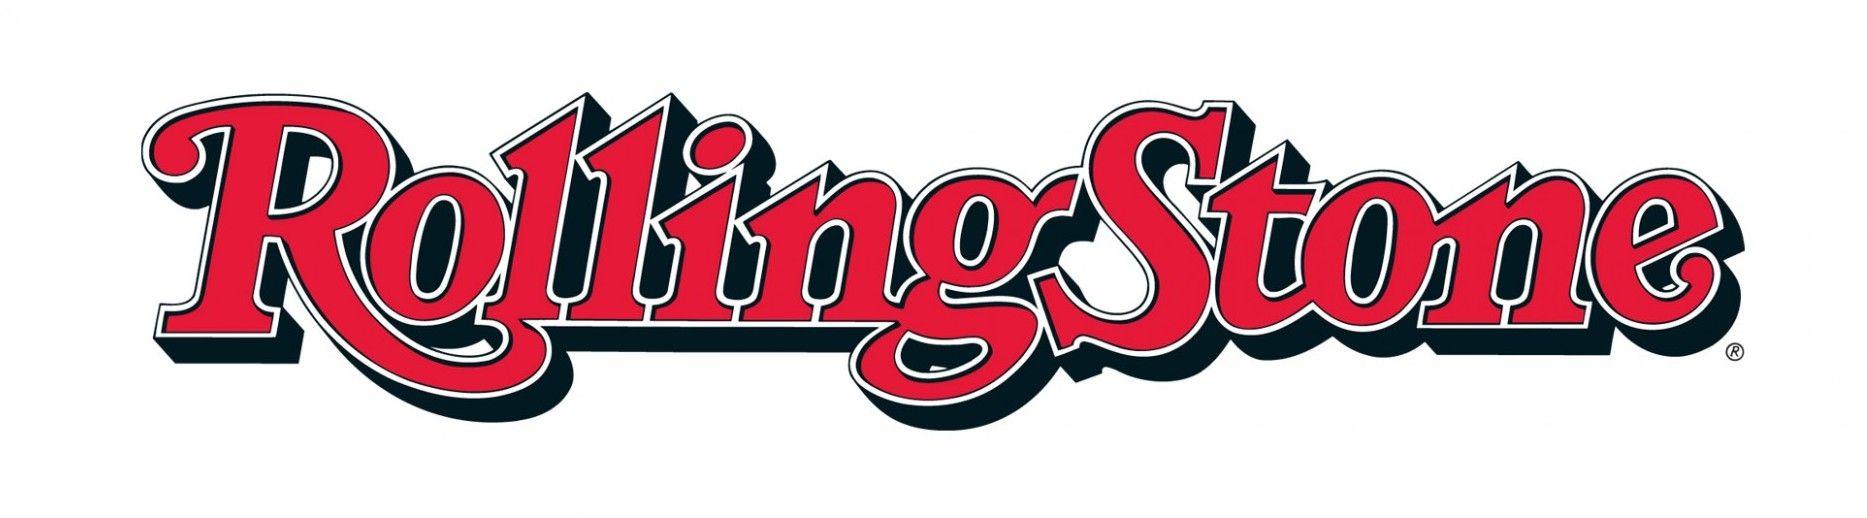 New Rolling Stone Logo - Rolling Stone LOGO 2 1940x970 E1445377472986